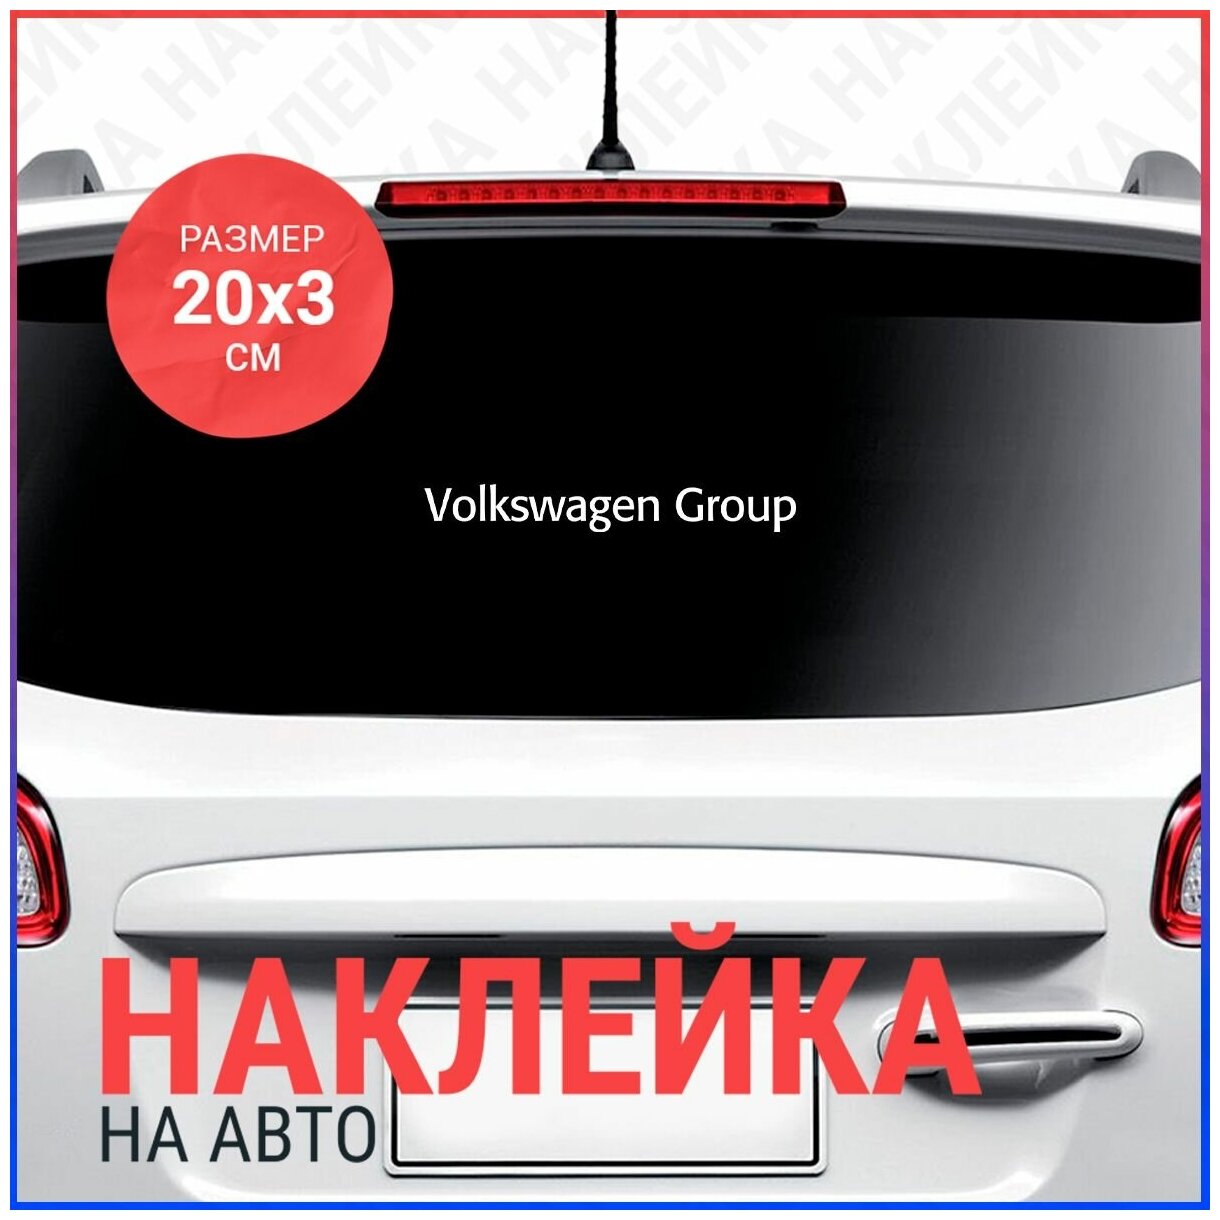 Наклейка на авто 20х3 Volkswagen Group